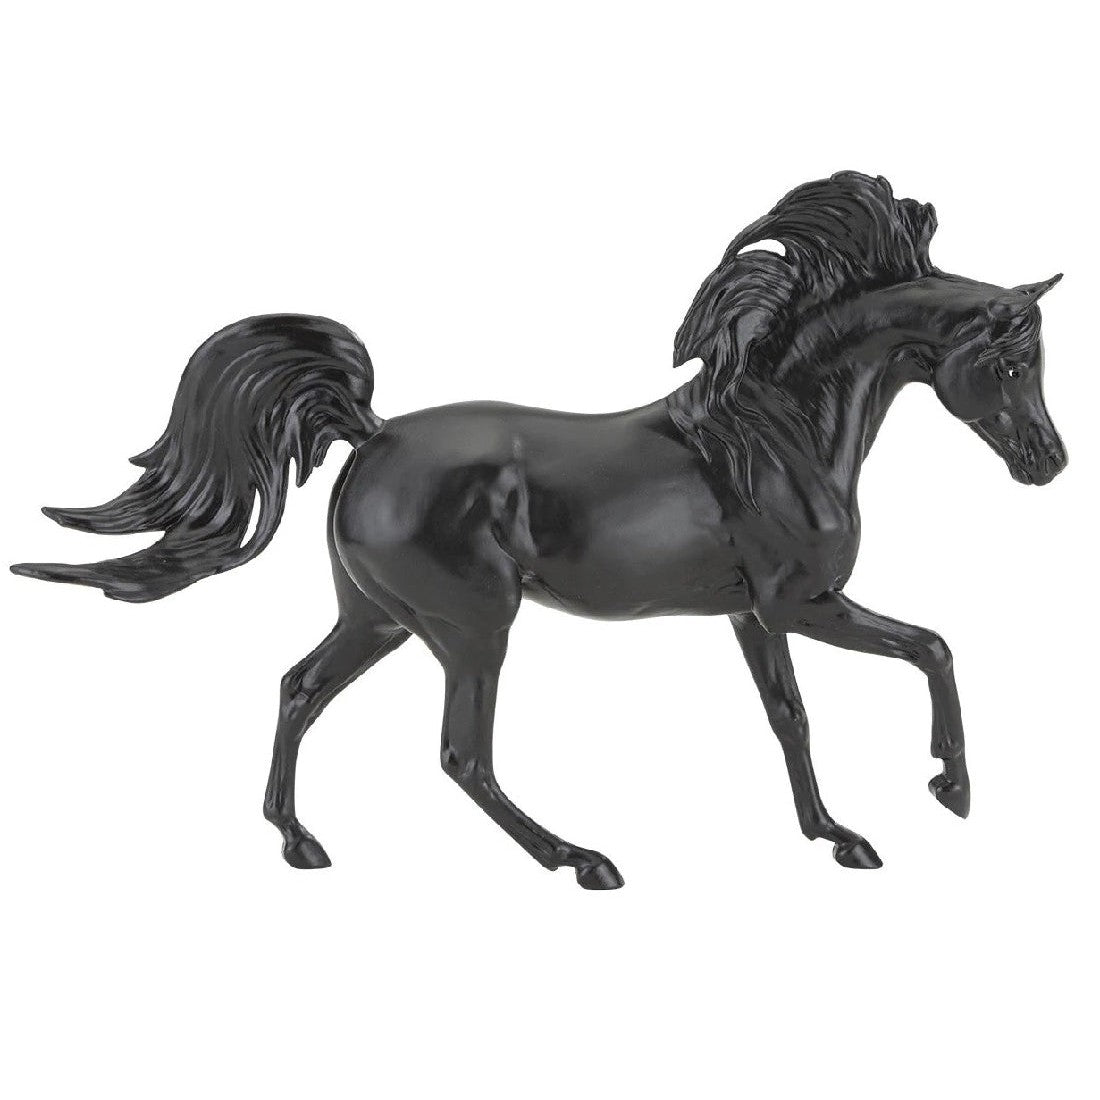 Breyer Horse Toys black model horse with flowing mane, plastic.